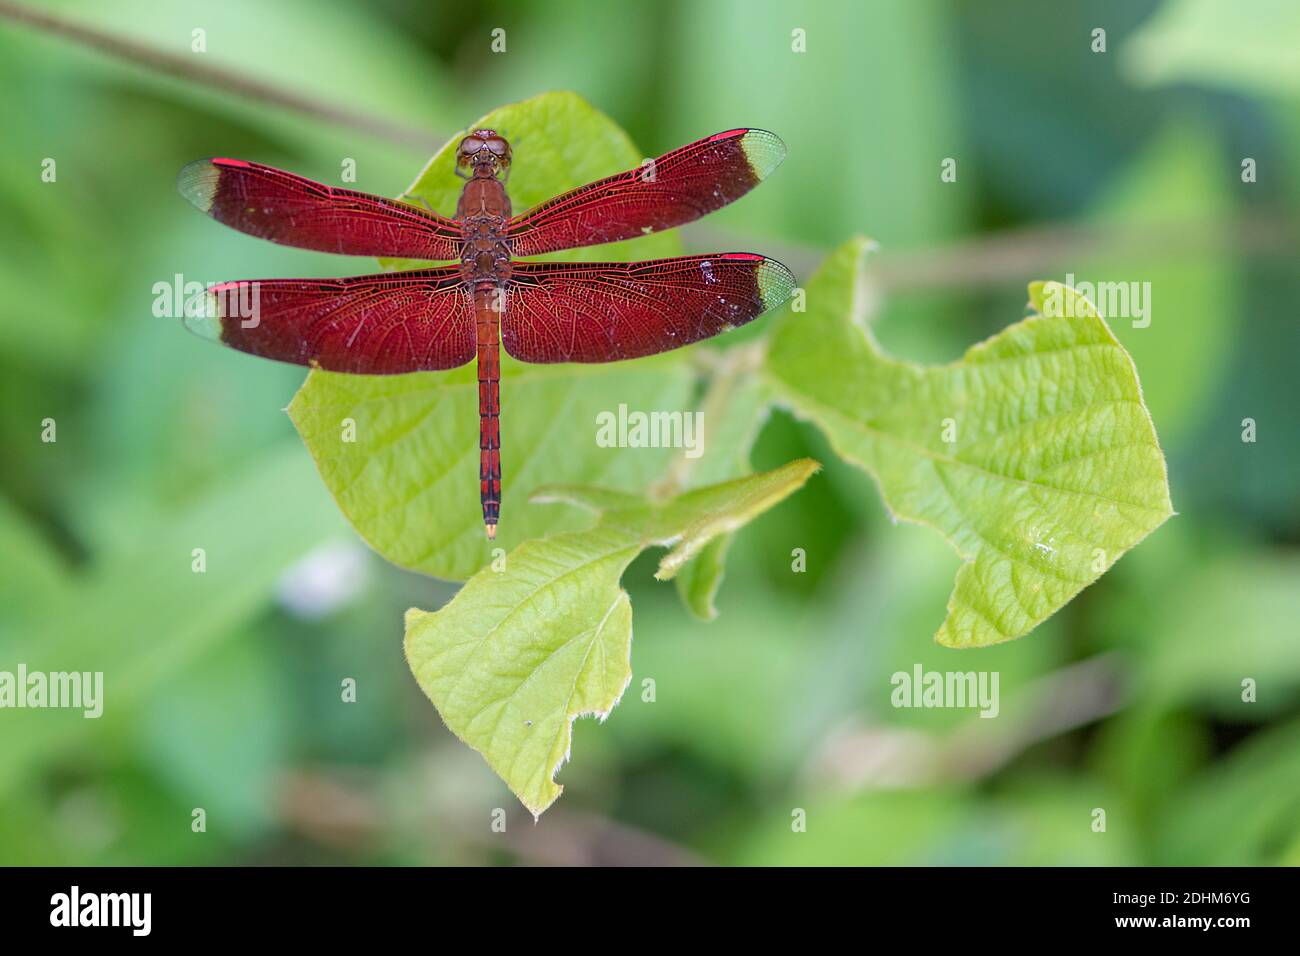 The dragonfly Neurothemis ramburii from Sepilok, Sabah, Borneo Stock Photo